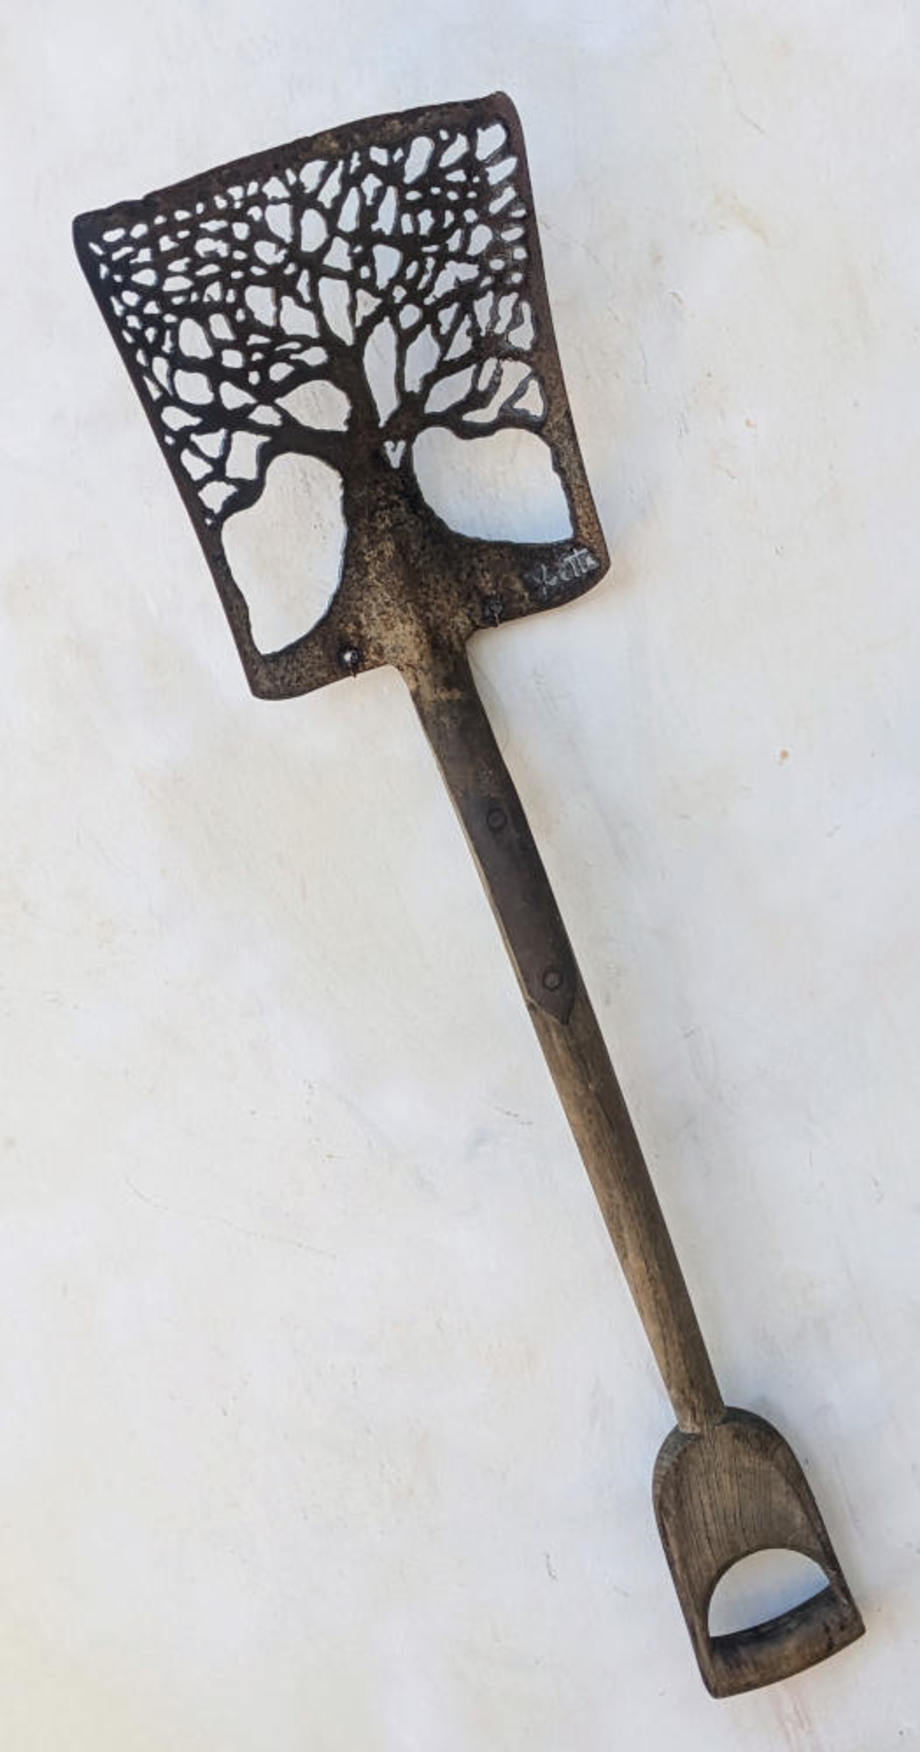 Antique Tree shovel